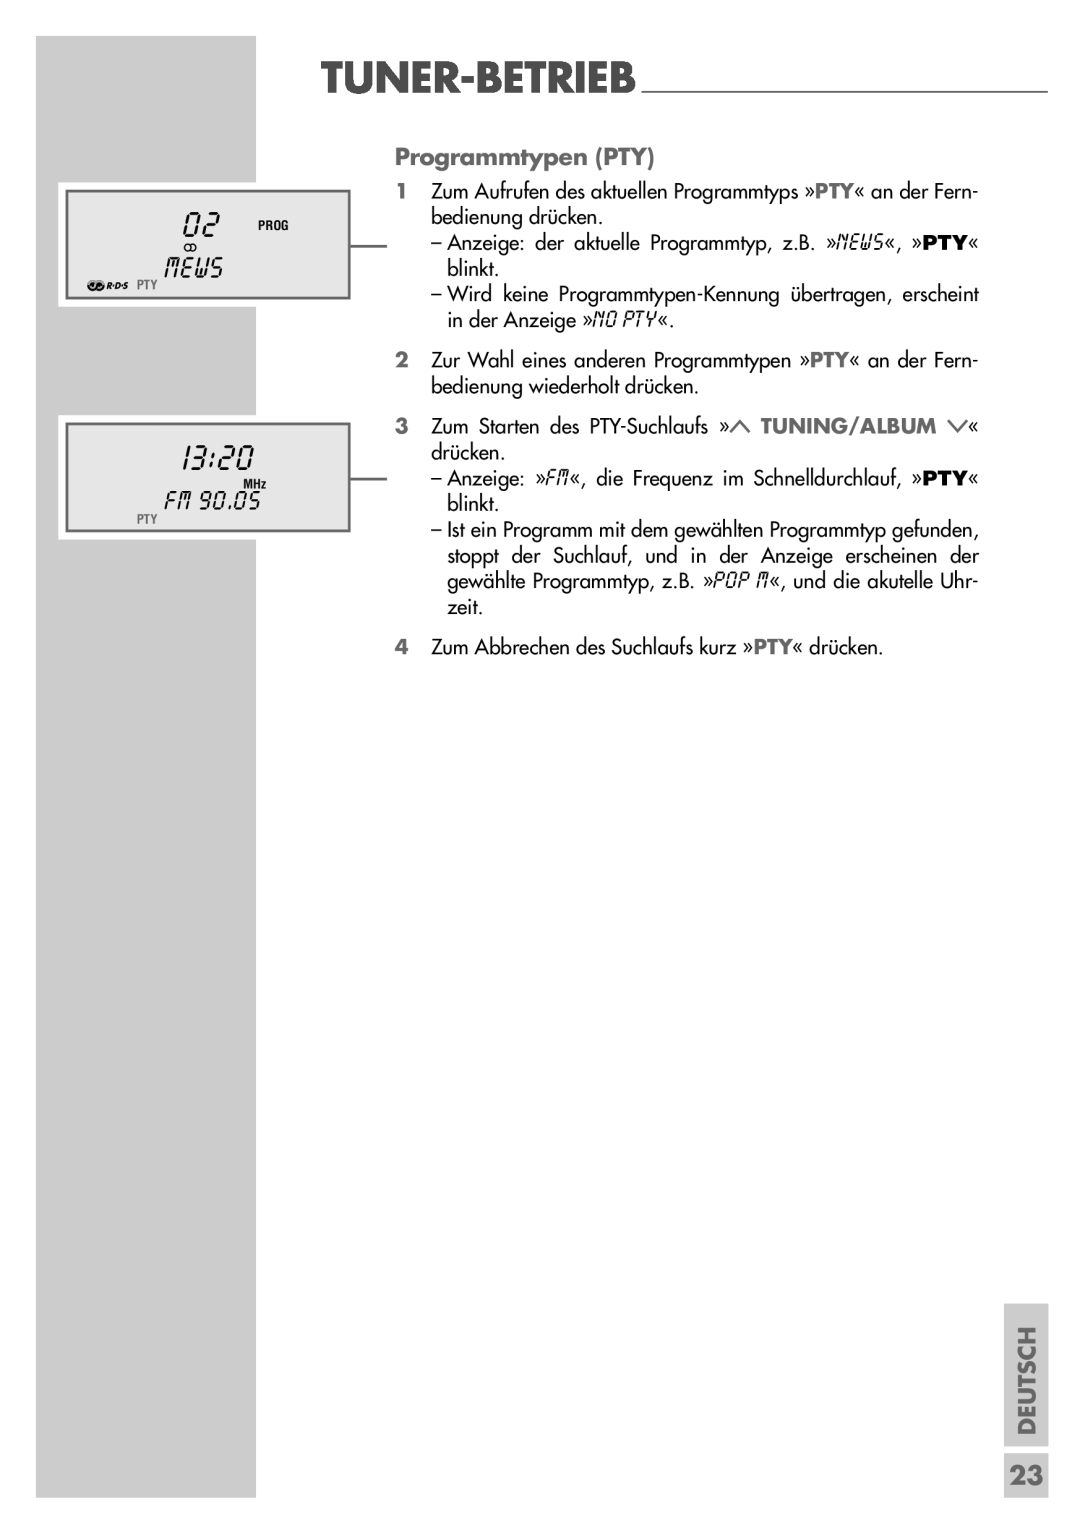 Grundig UMS 5400 DEC manual Mews, Programmtypen PTY, Deutsch 